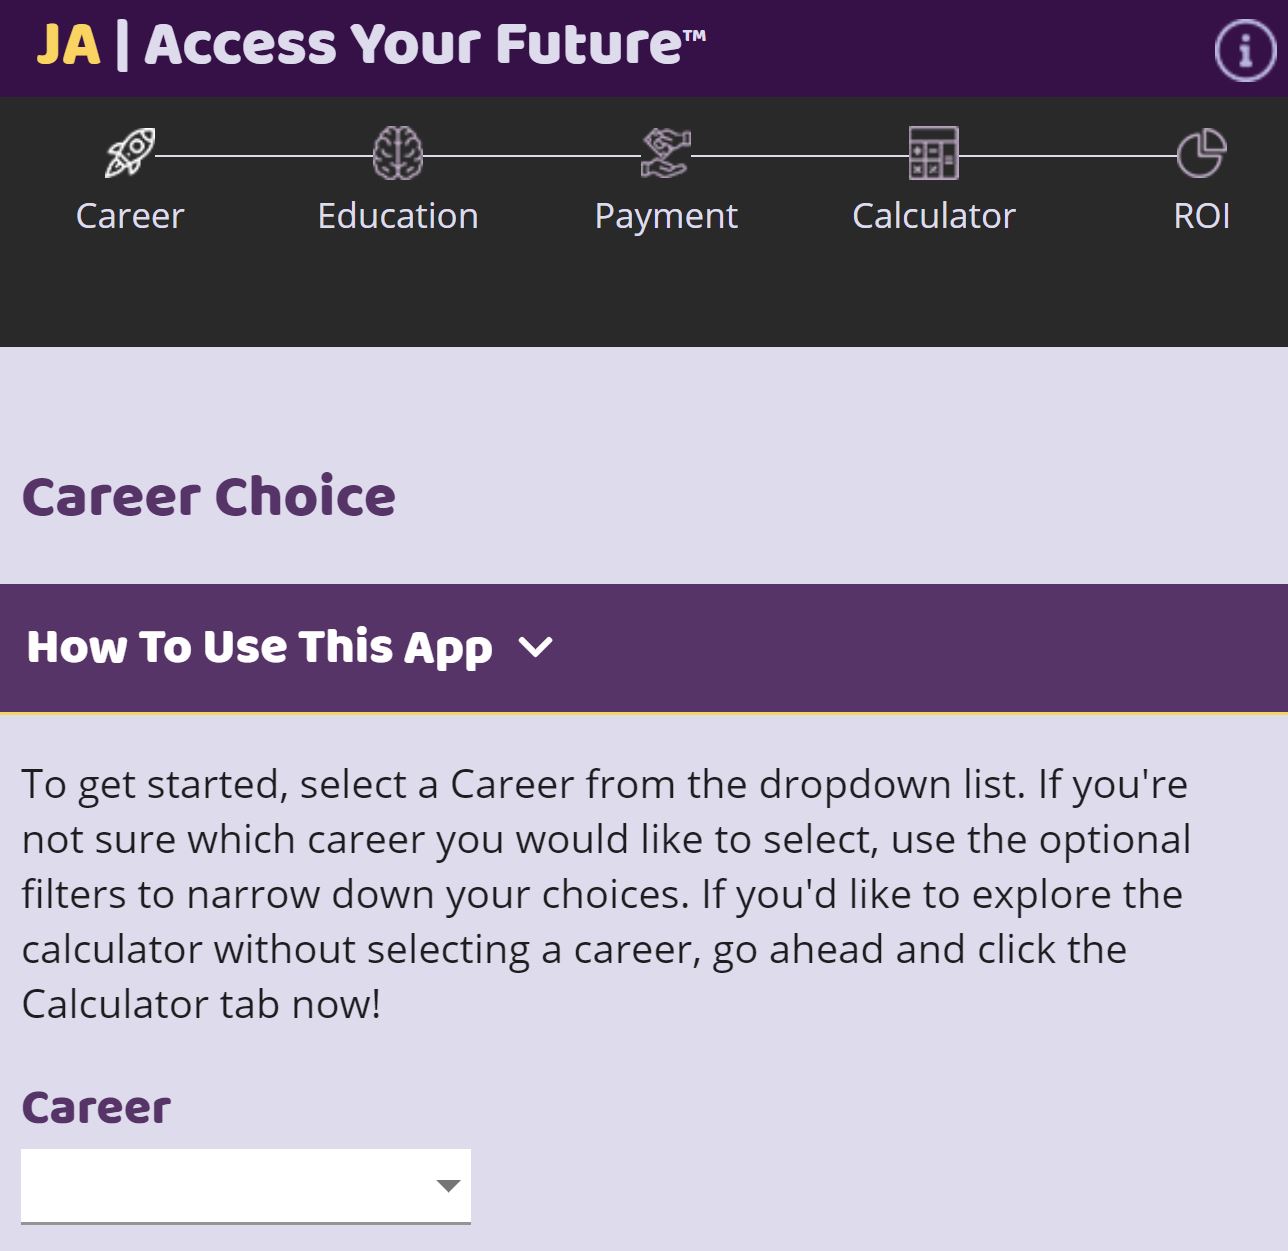 JA Access Your Future image